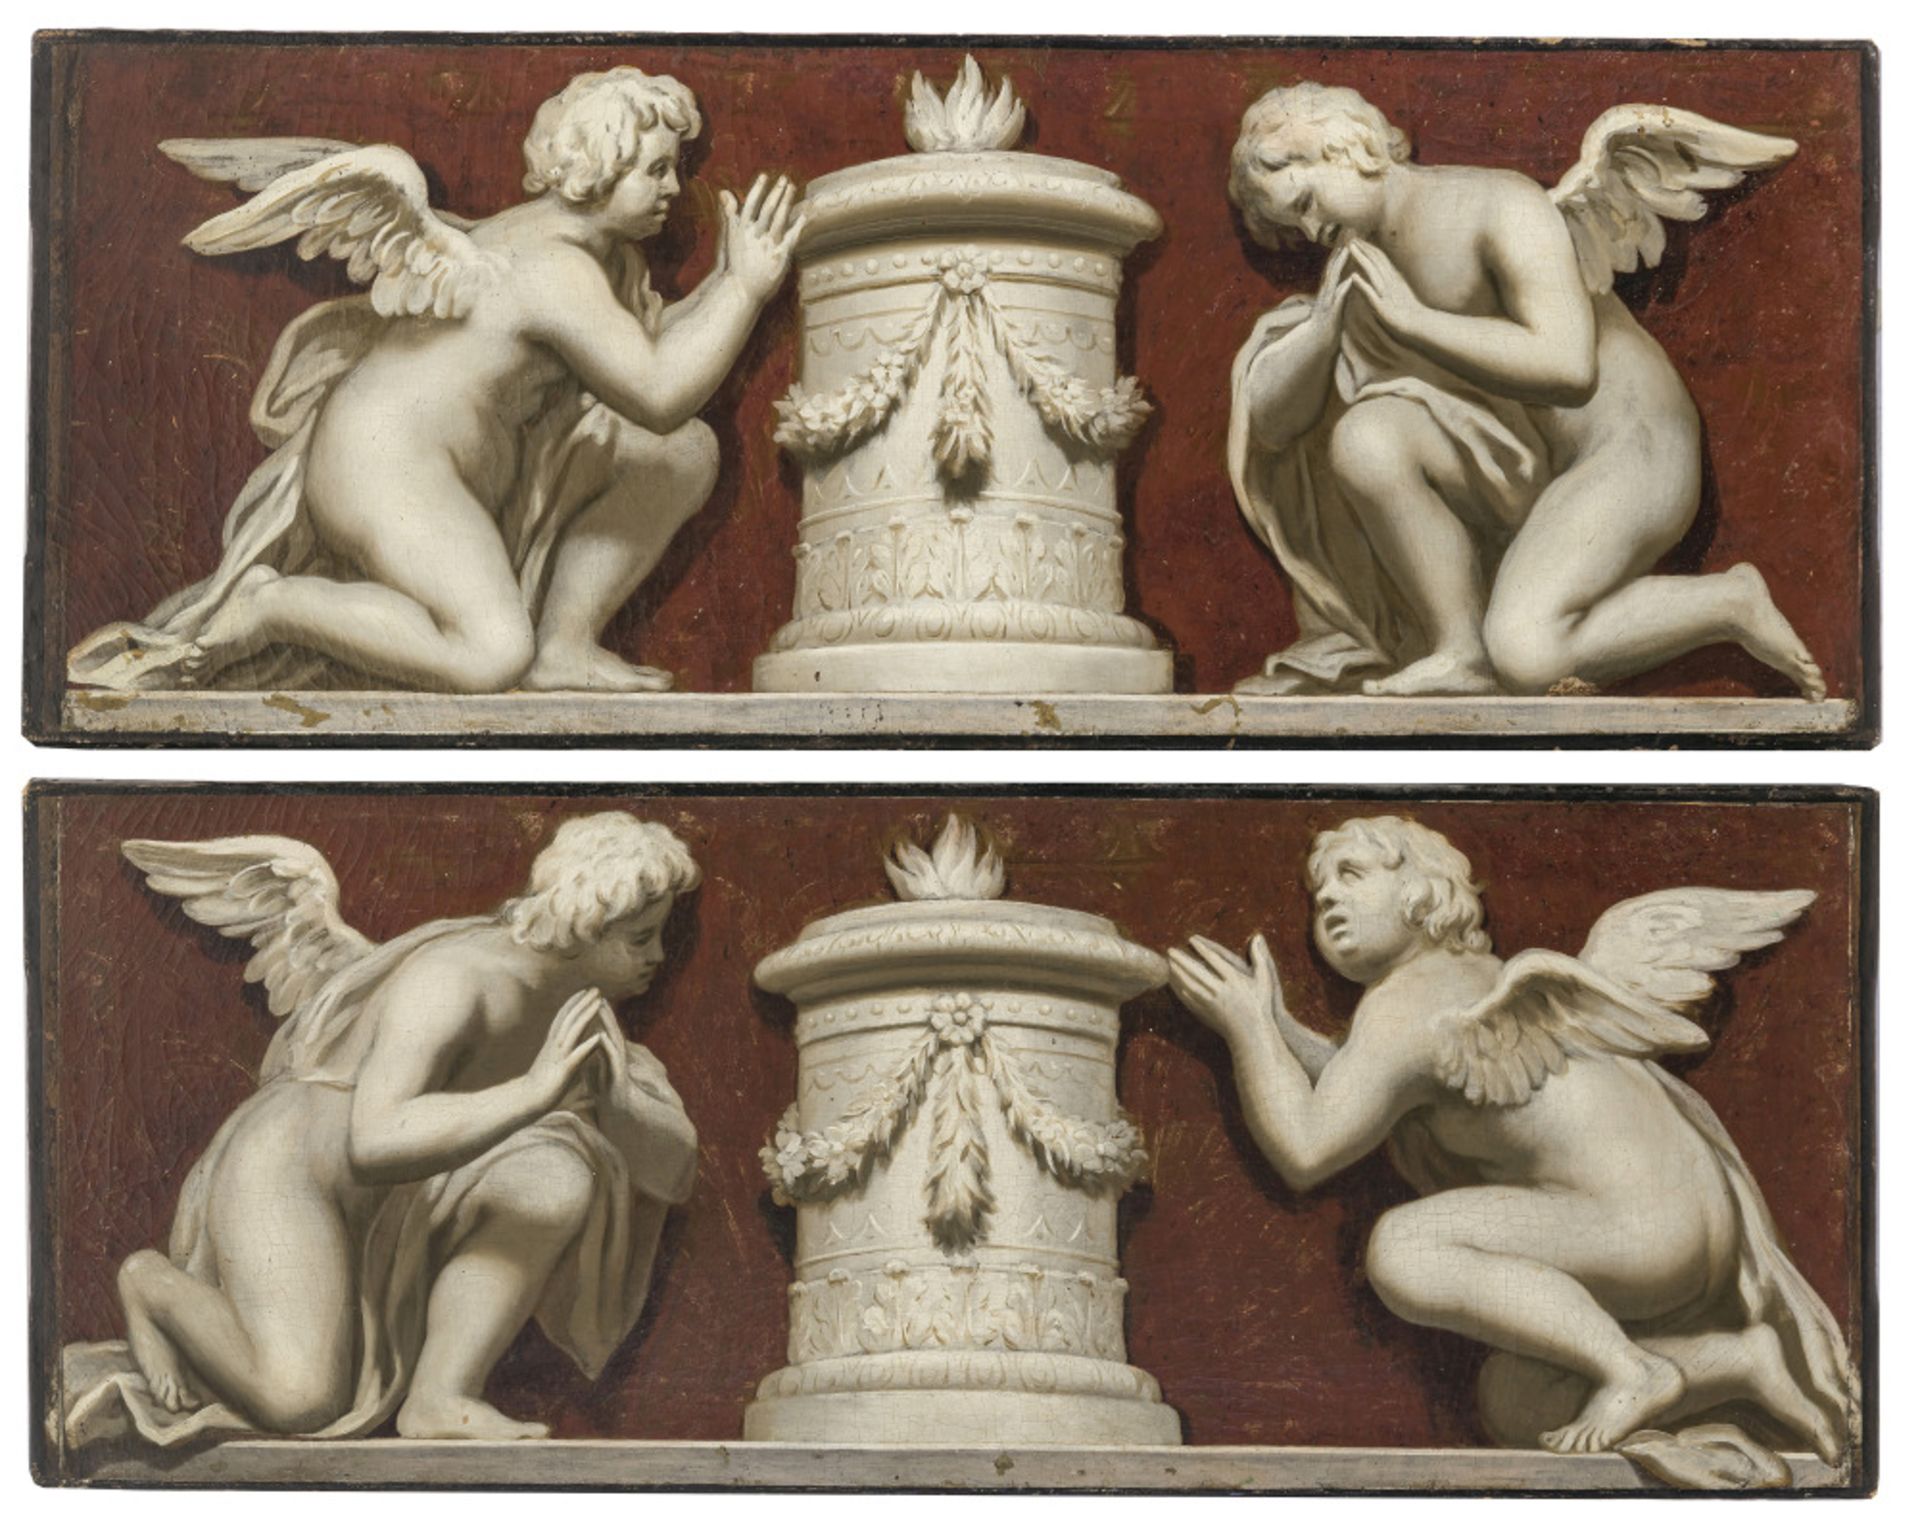 Unbekannt 18th century - Kneeling angels in front of sacrificial columns